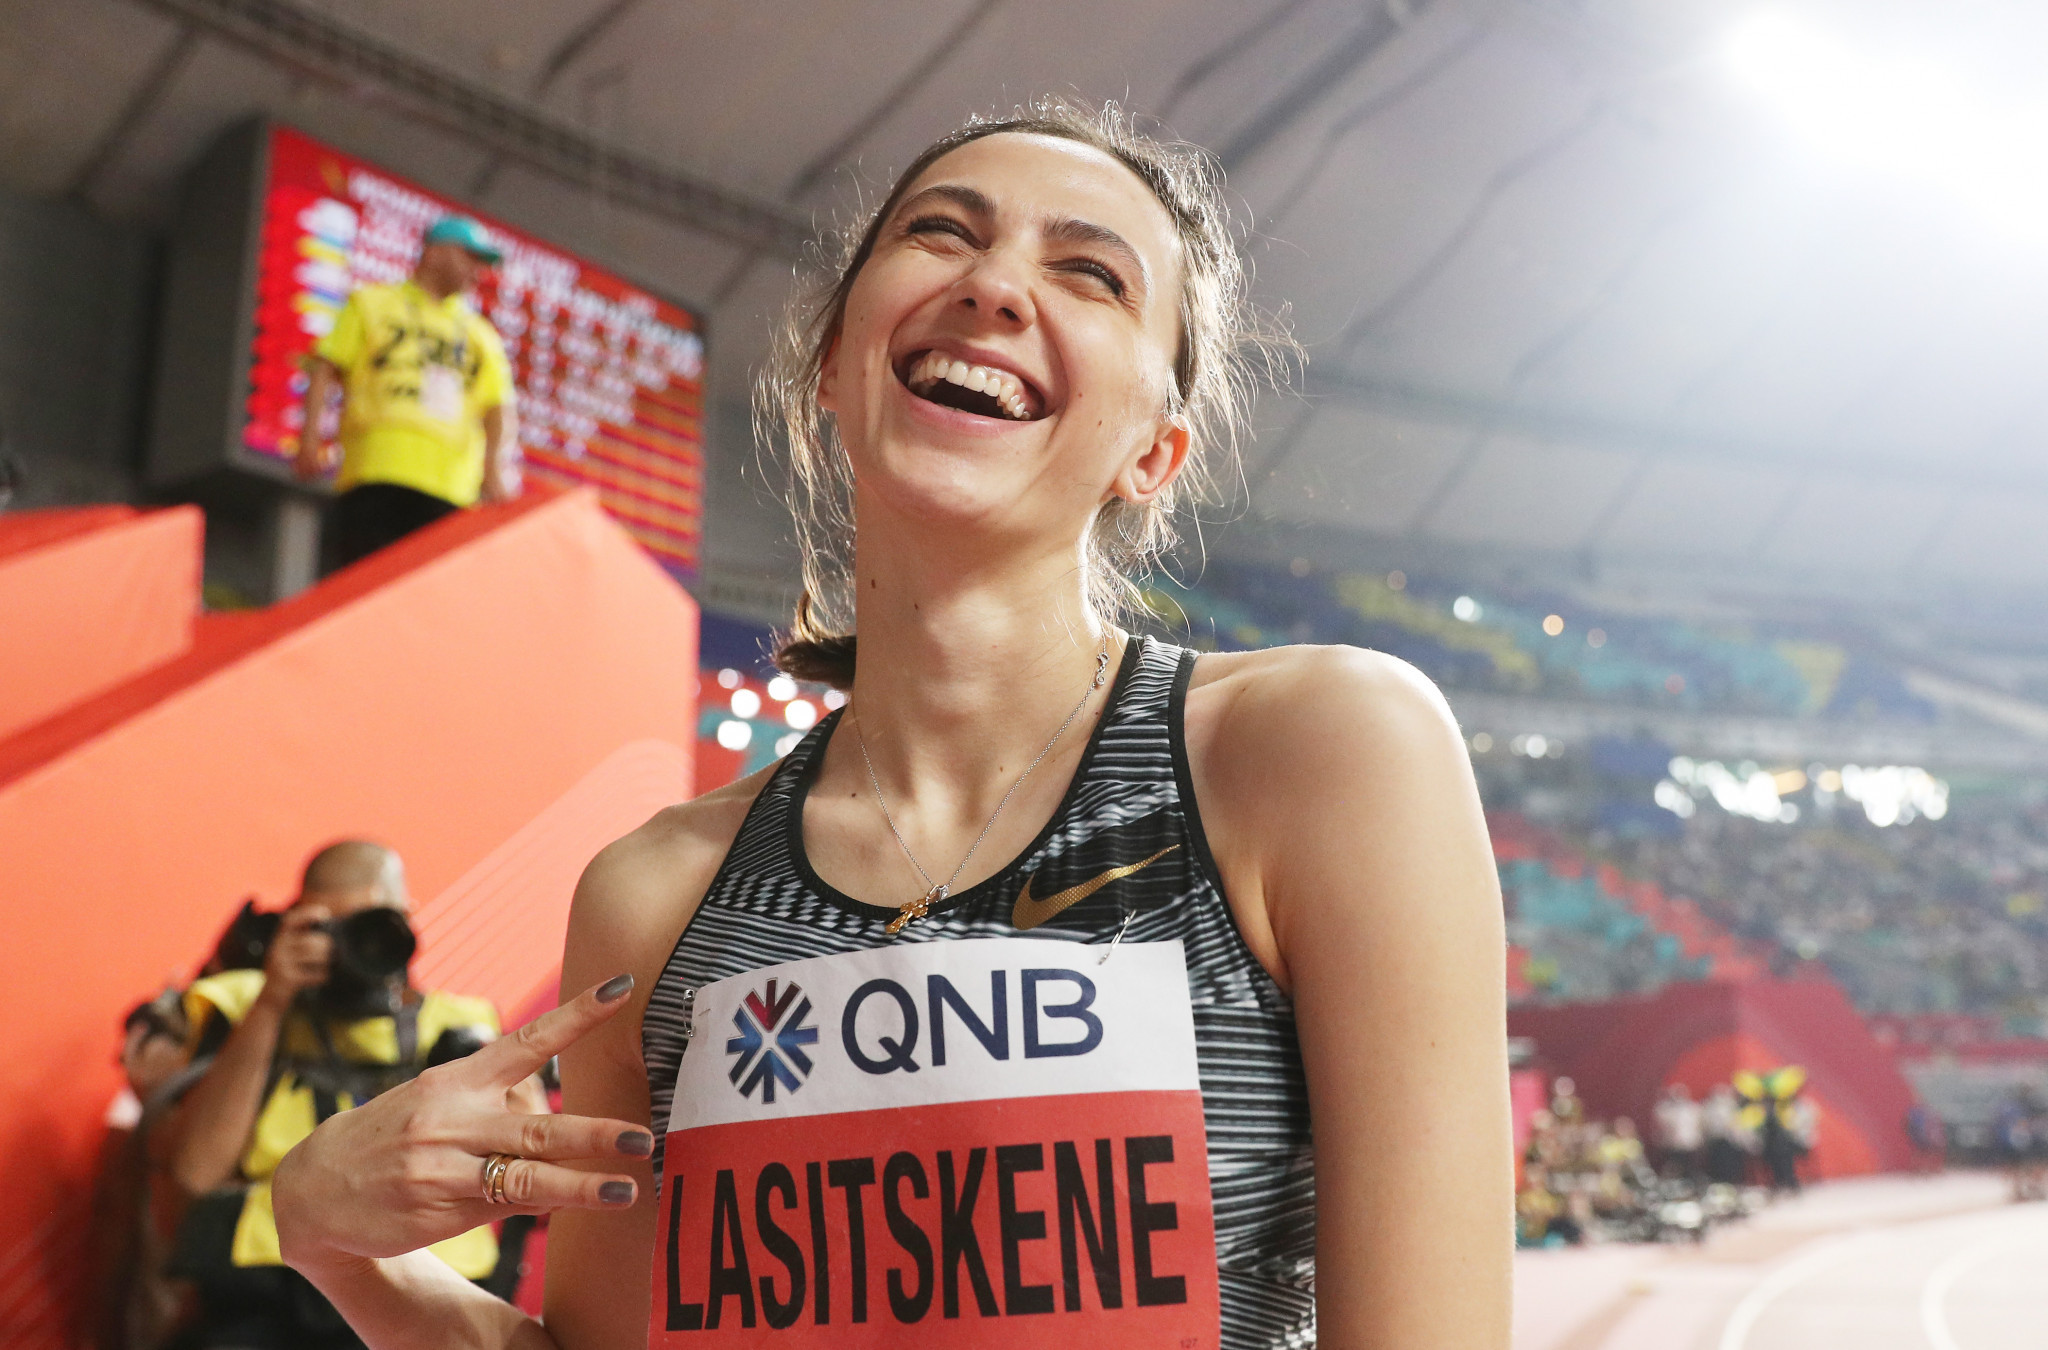 Russia's Mariya Lasitskene, competing under the 